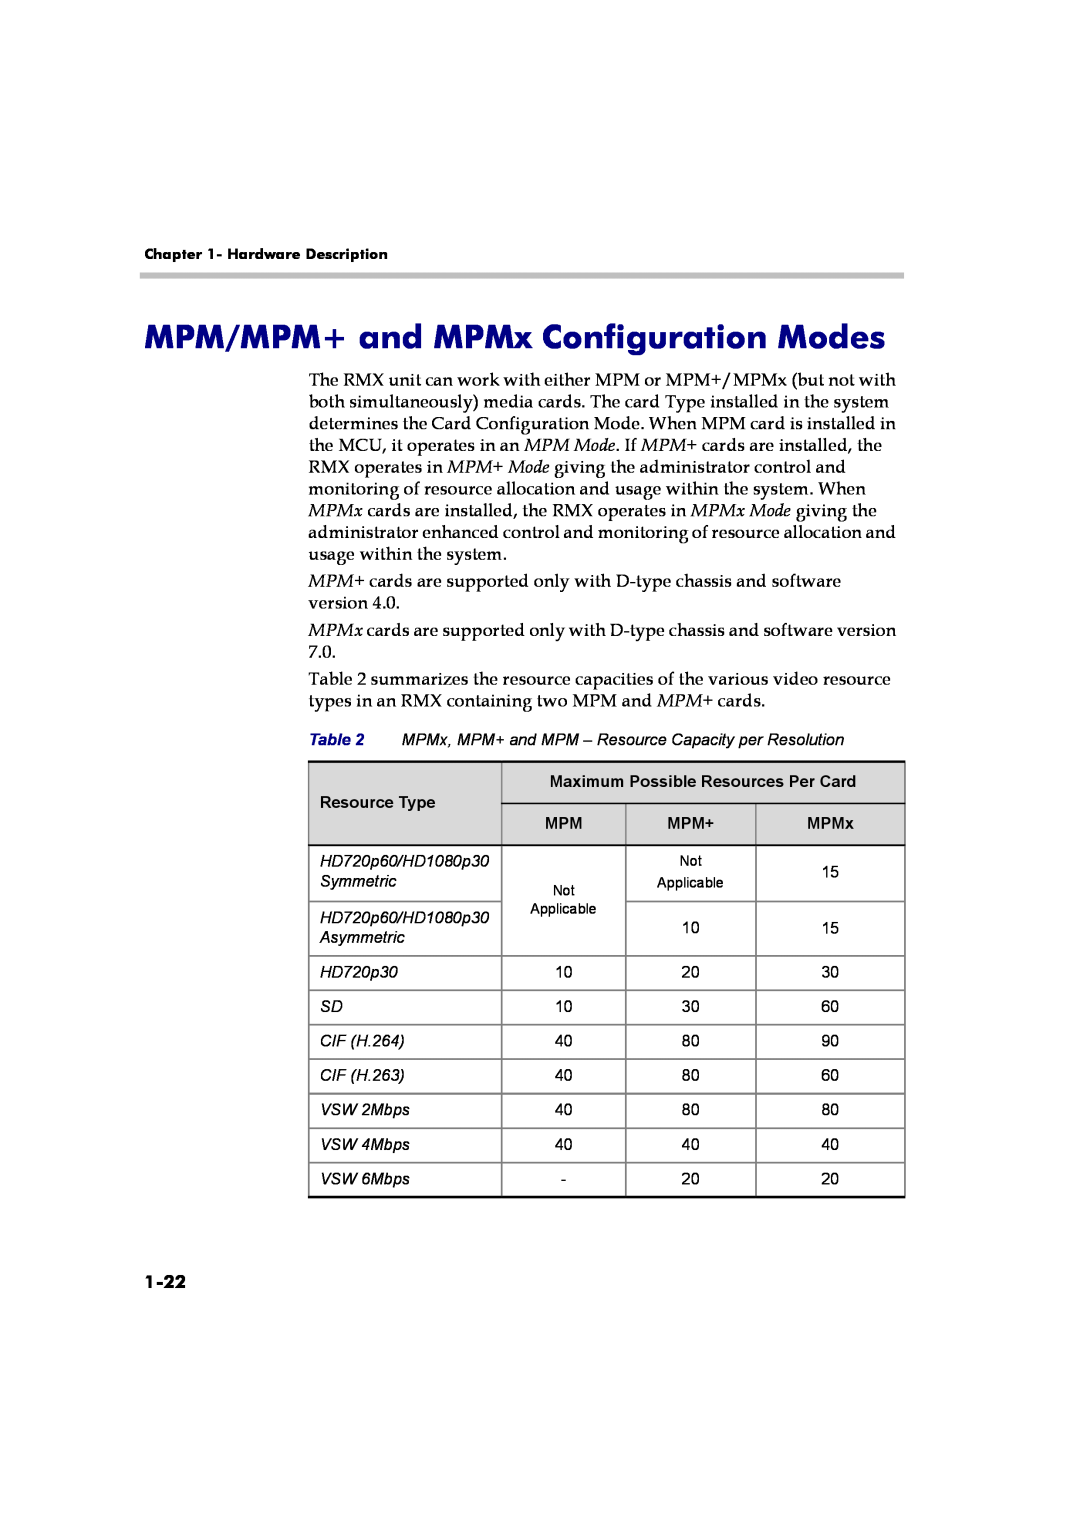 Polycom DOC2558B MPM/MPM+ and MPMx Configuration Modes, 1-22, Resource Type, Maximum Possible Resources Per Card, Mpm+ 